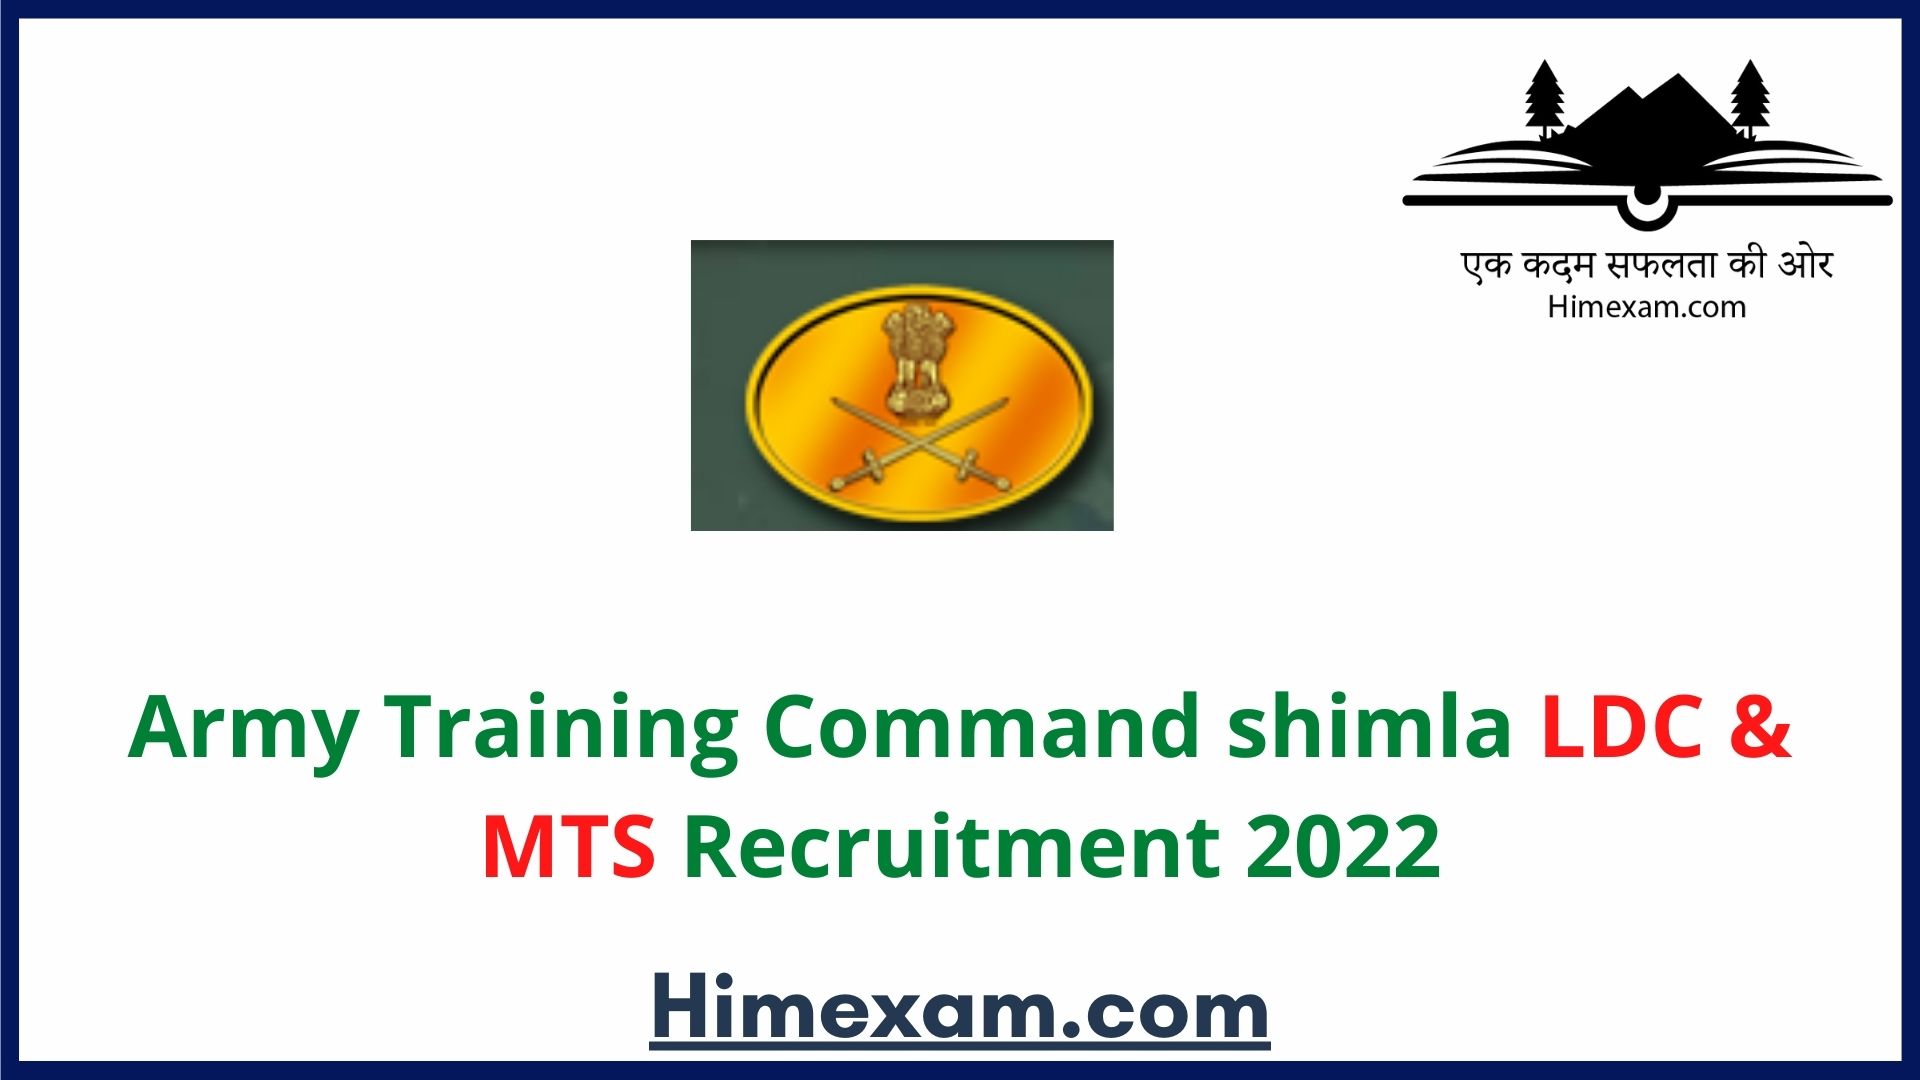 Army Training Command shimla LDC & MTS Recruitment 2022